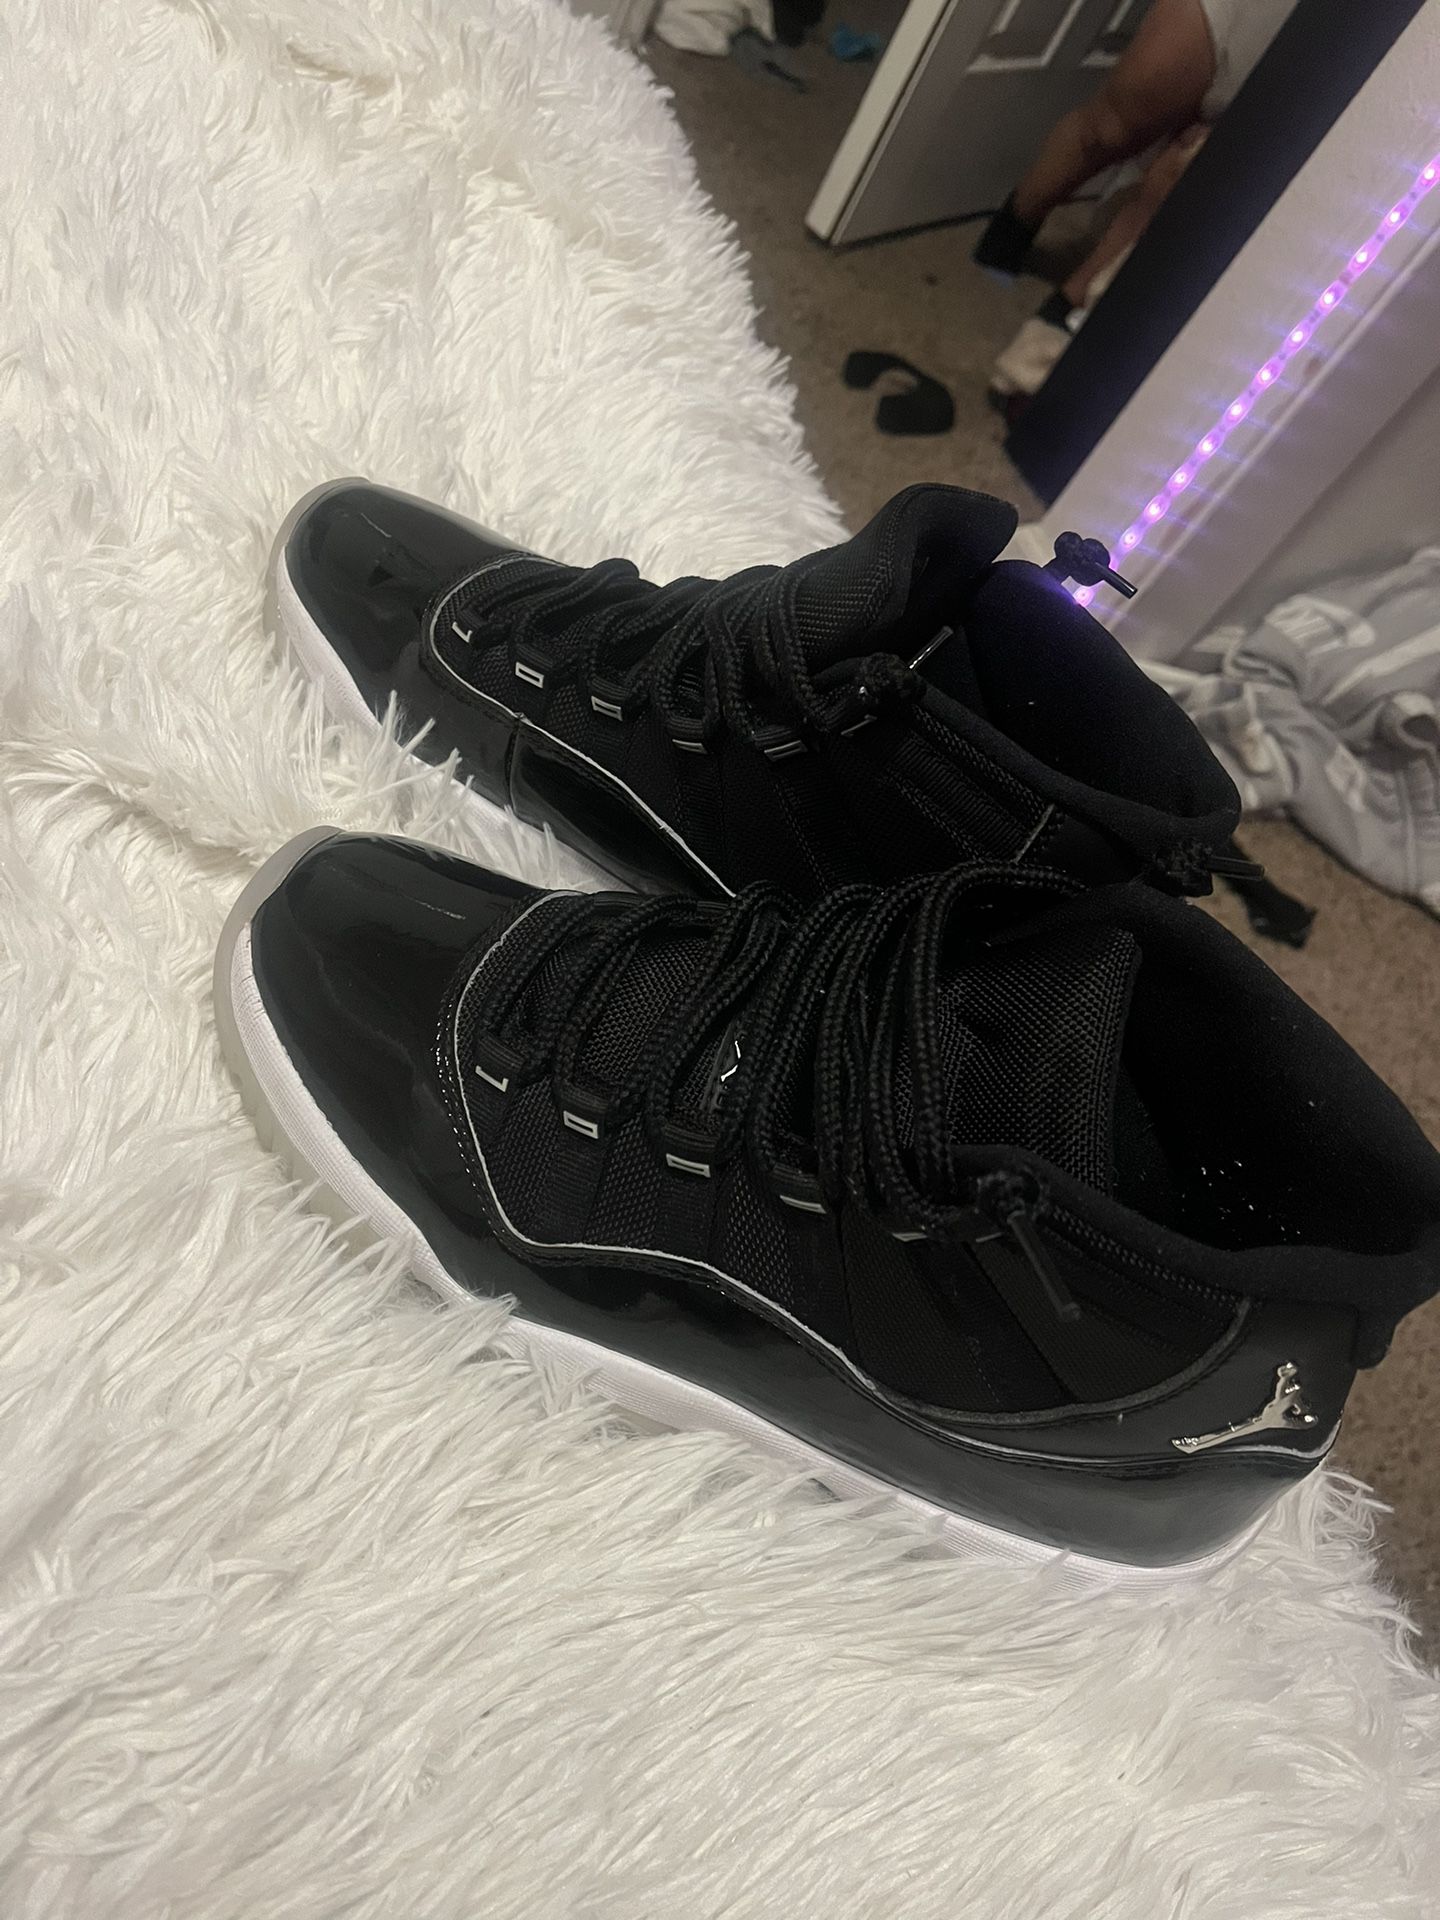 Black Jordan 13 Size 8’5